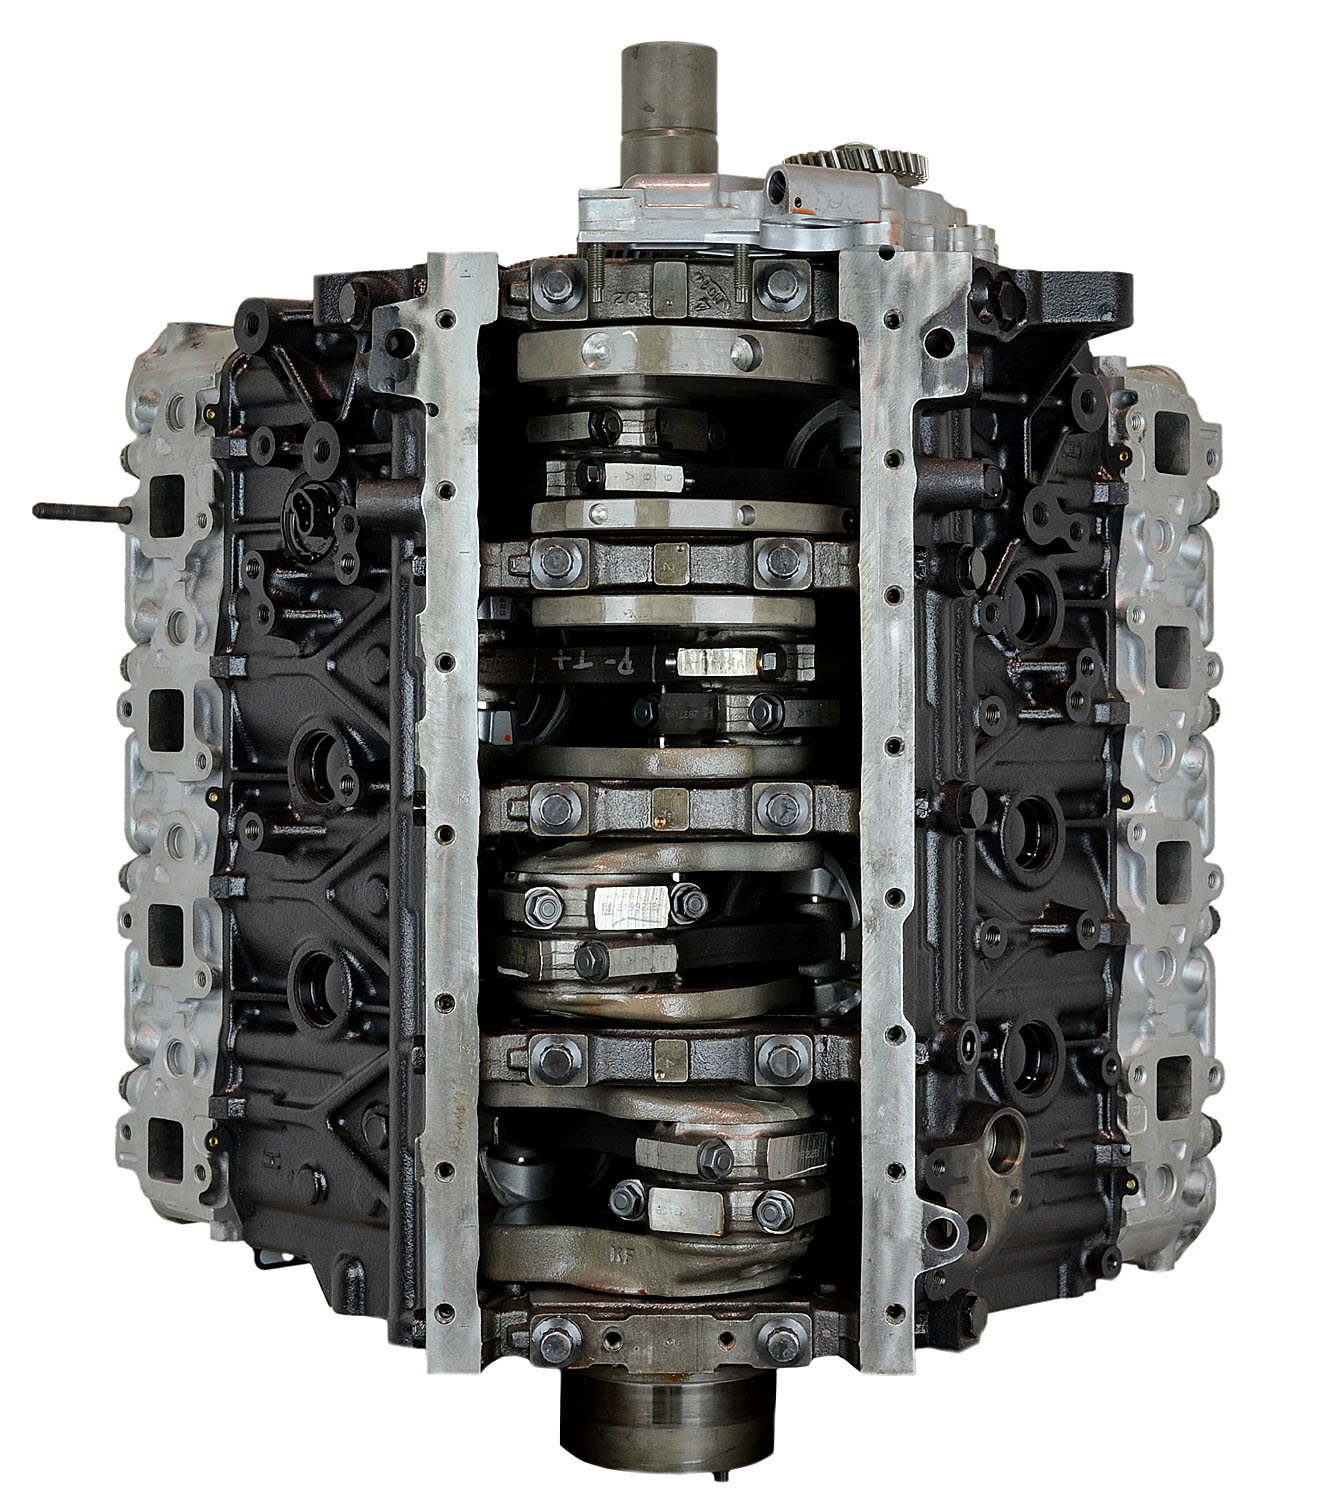 Chevy 6.6L Duramax LLY V8 Remanufactured Engine - 2004-2005